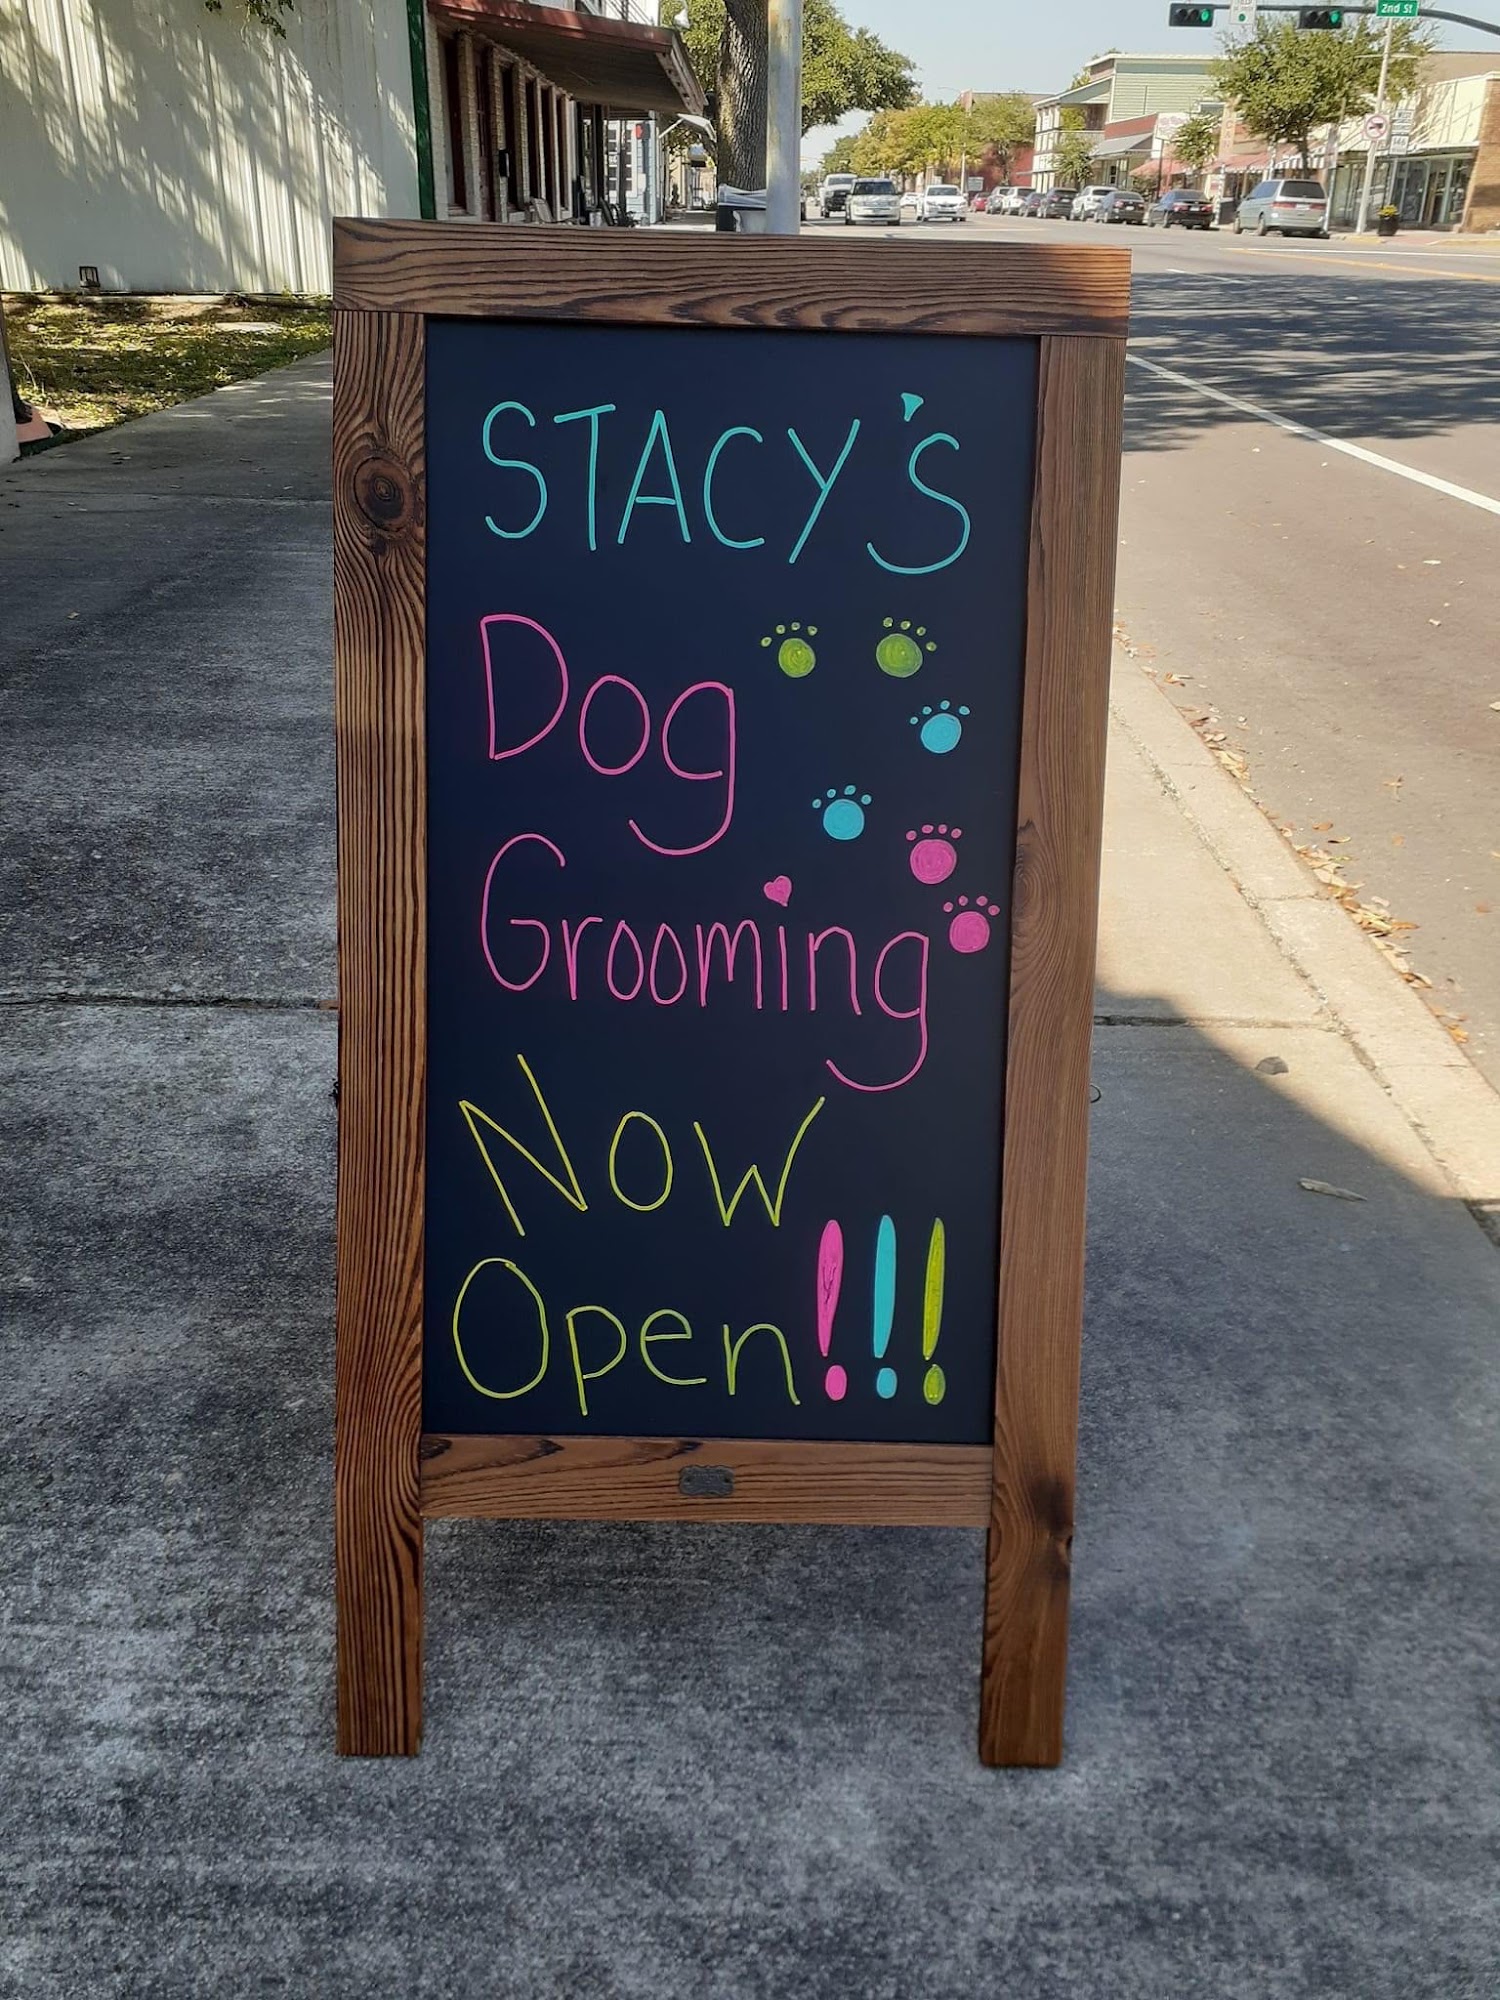 Stacy's Dog Grooming LLC, LaPorte TX 211 W Main St, La Porte Texas 77571